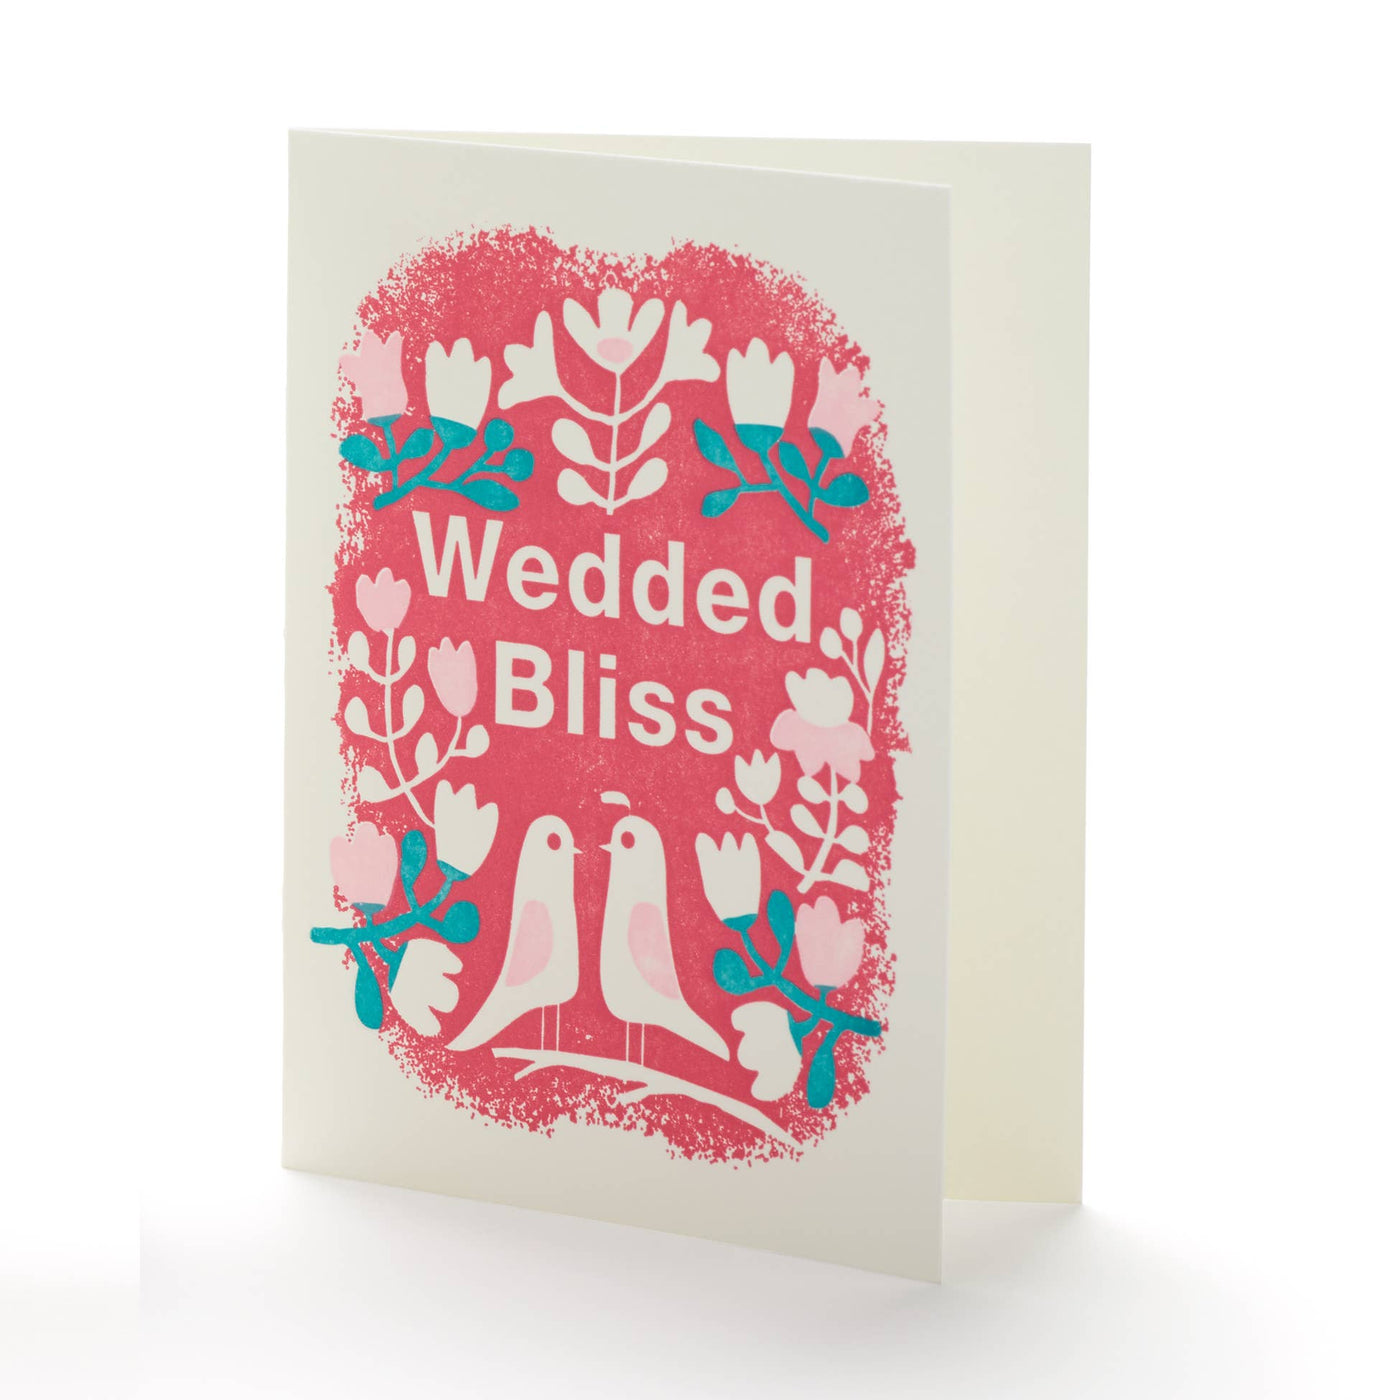 Love Birds "Wedded Bliss" notecard